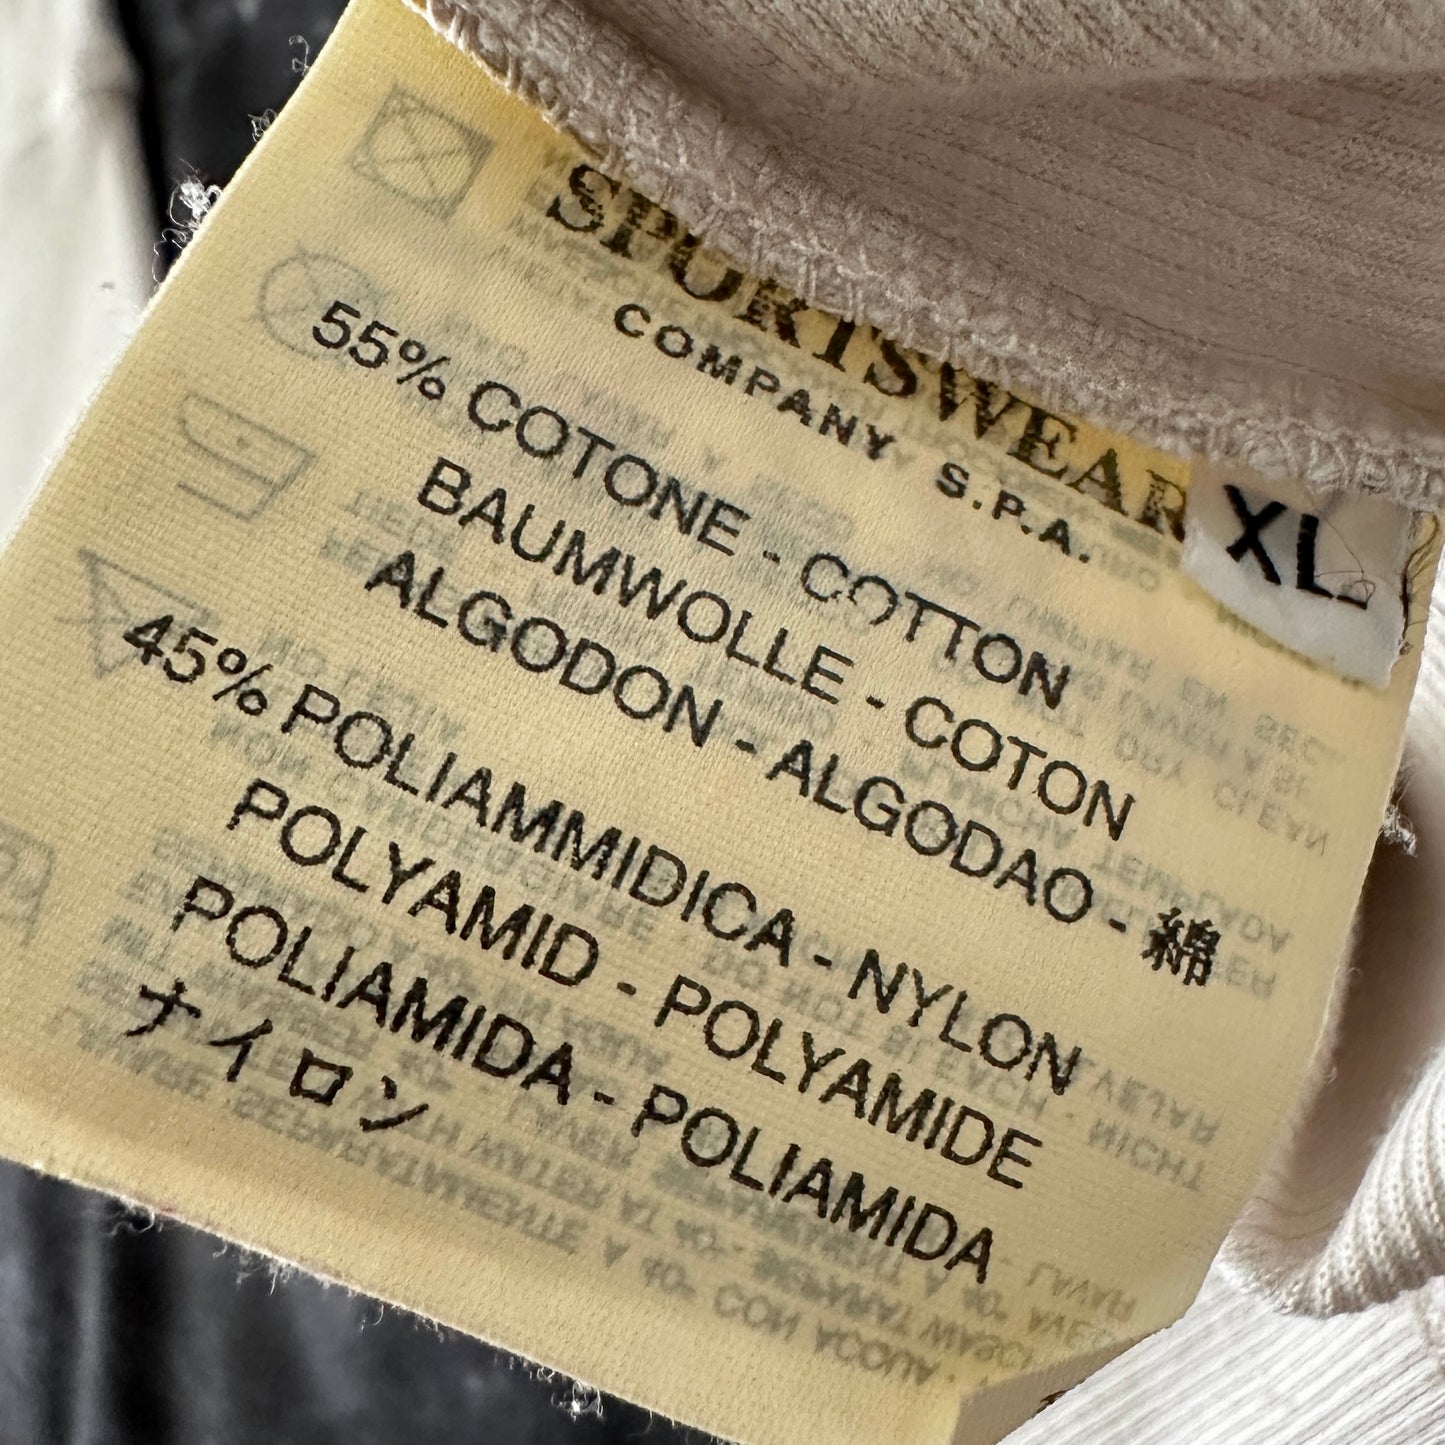 Stone Island Vintage Longsleeve Shirt 2000 - XL - Made in Italy